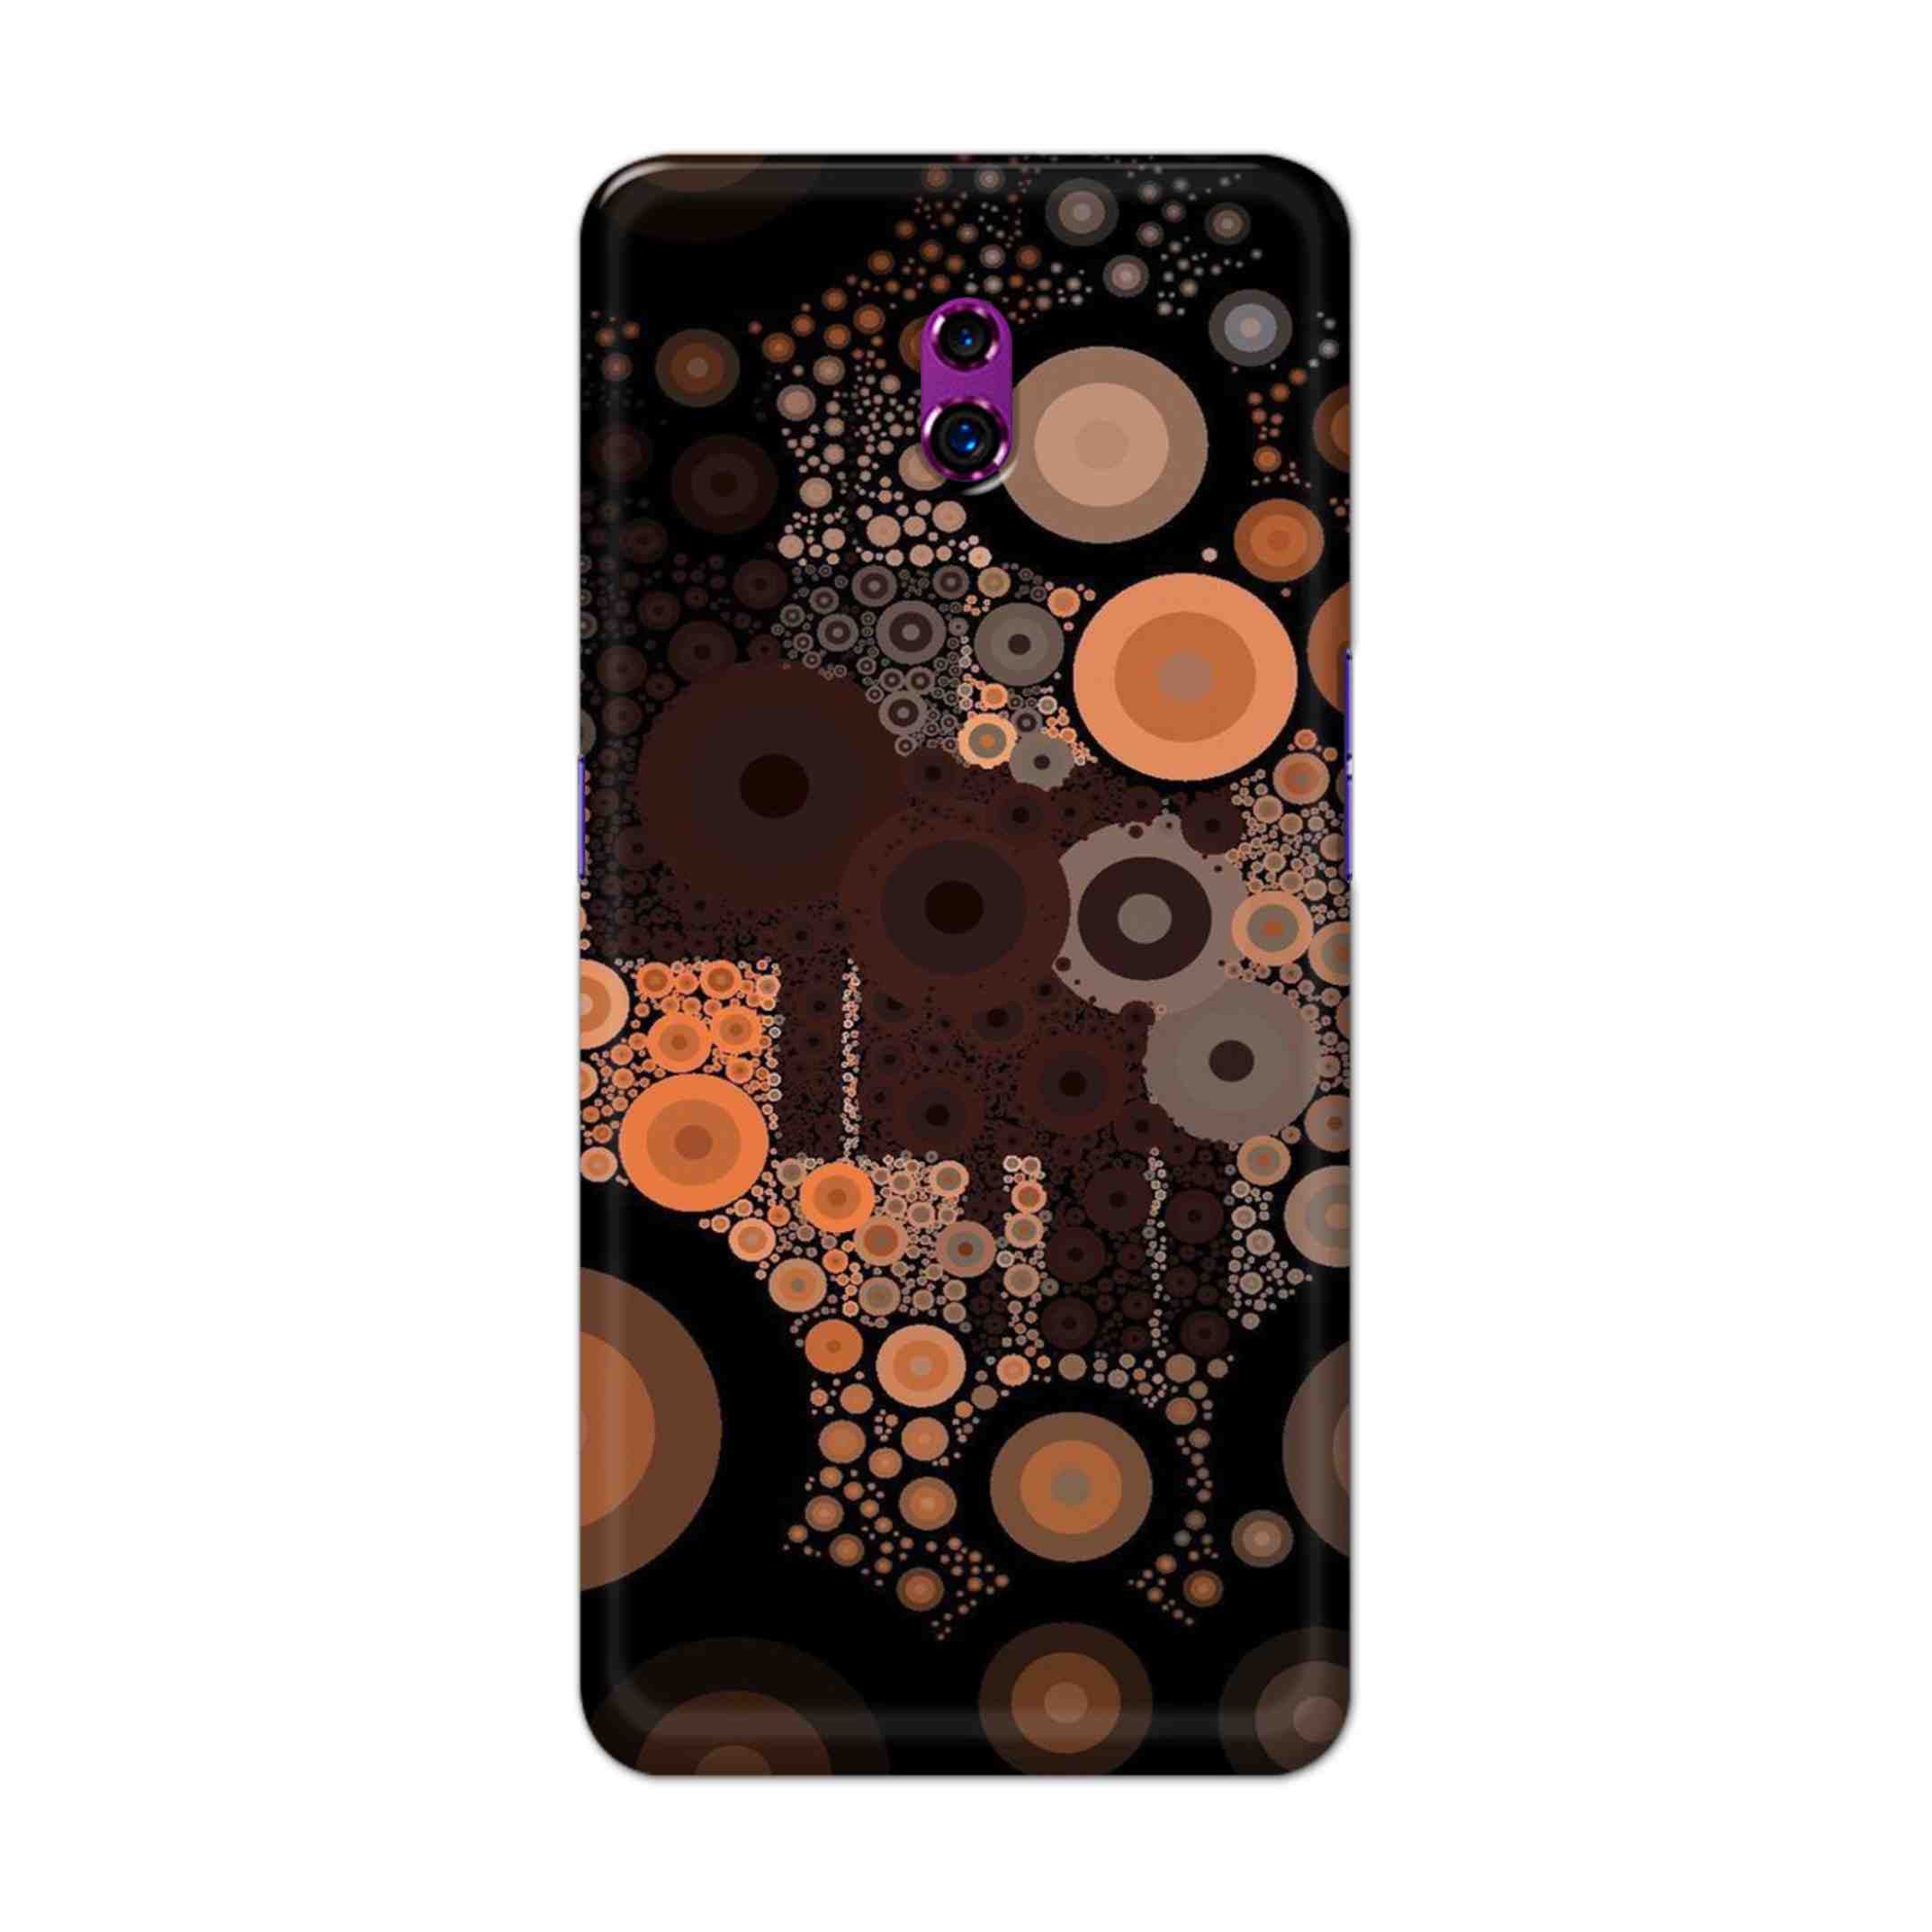 Buy Golden Circle Hard Back Mobile Phone Case Cover For Oppo Reno Online